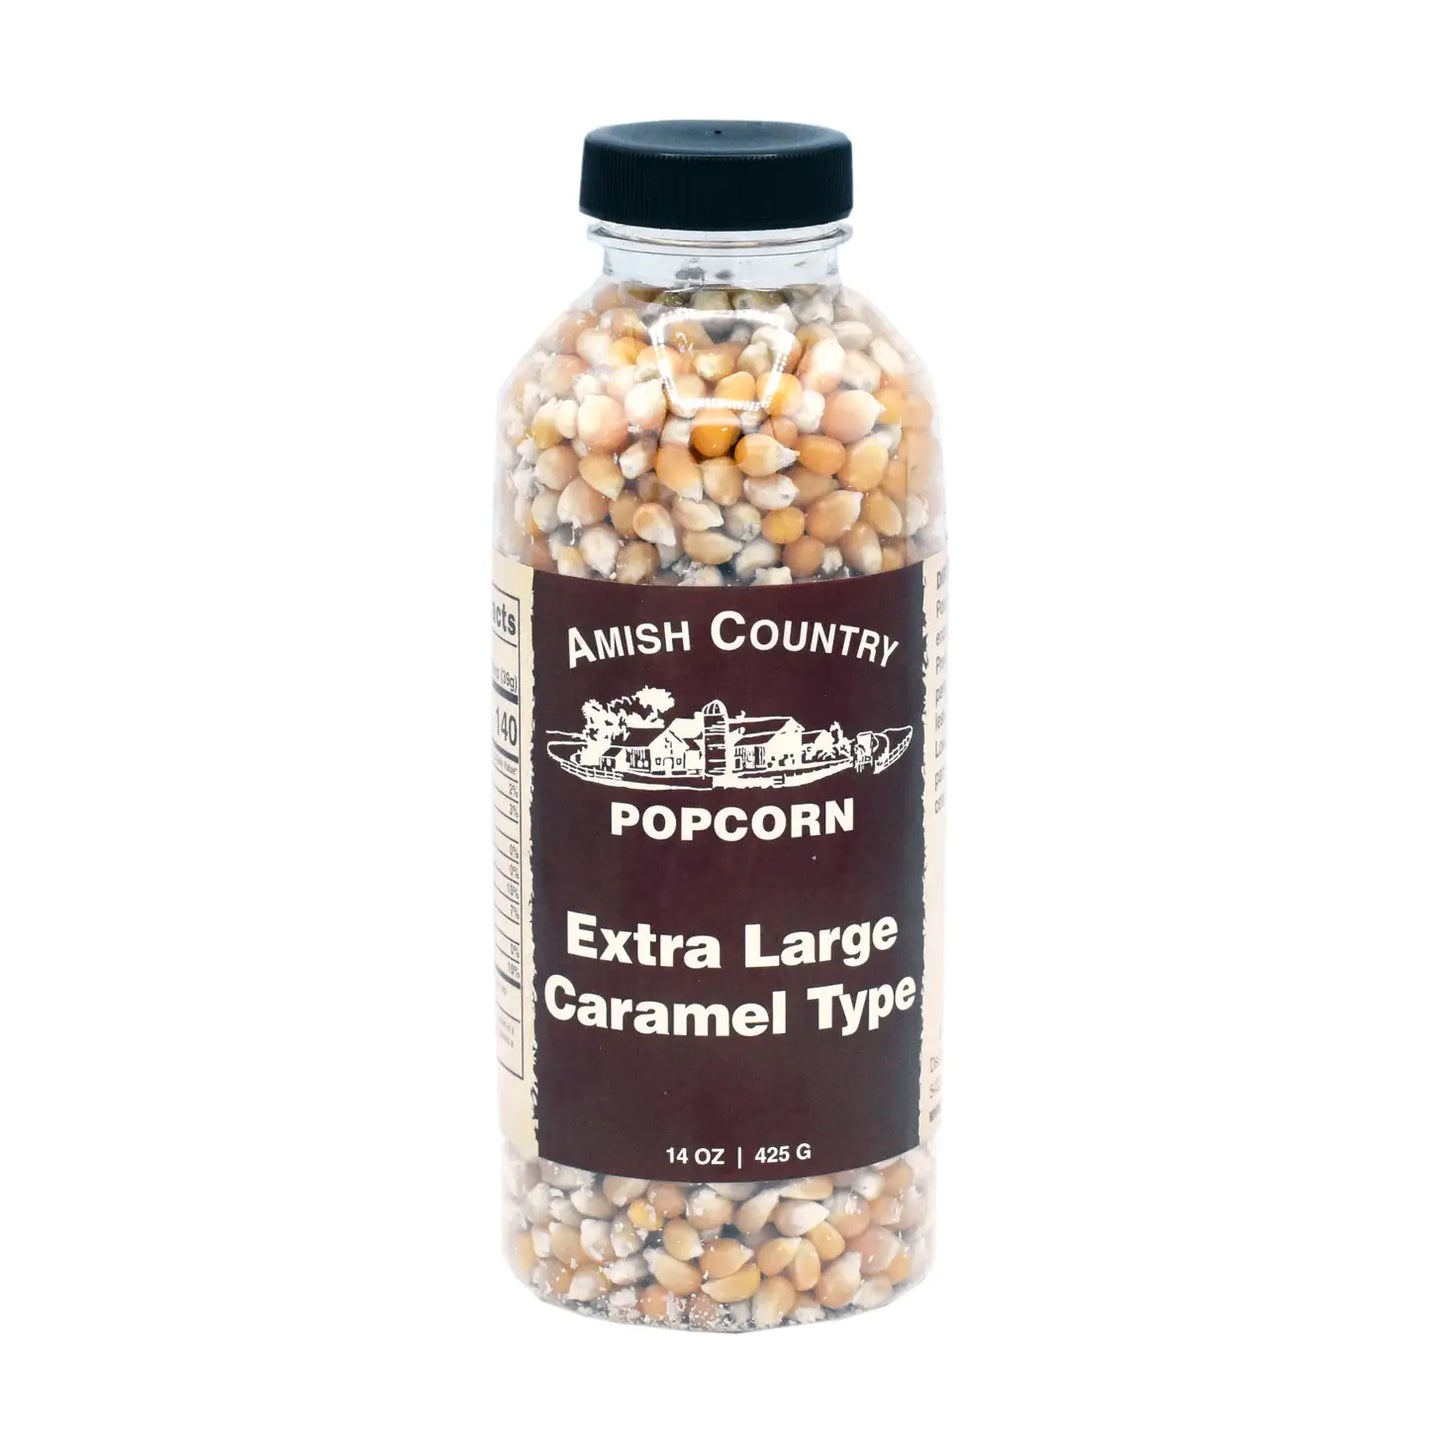 A.C. Popcorn XL Caramel Type